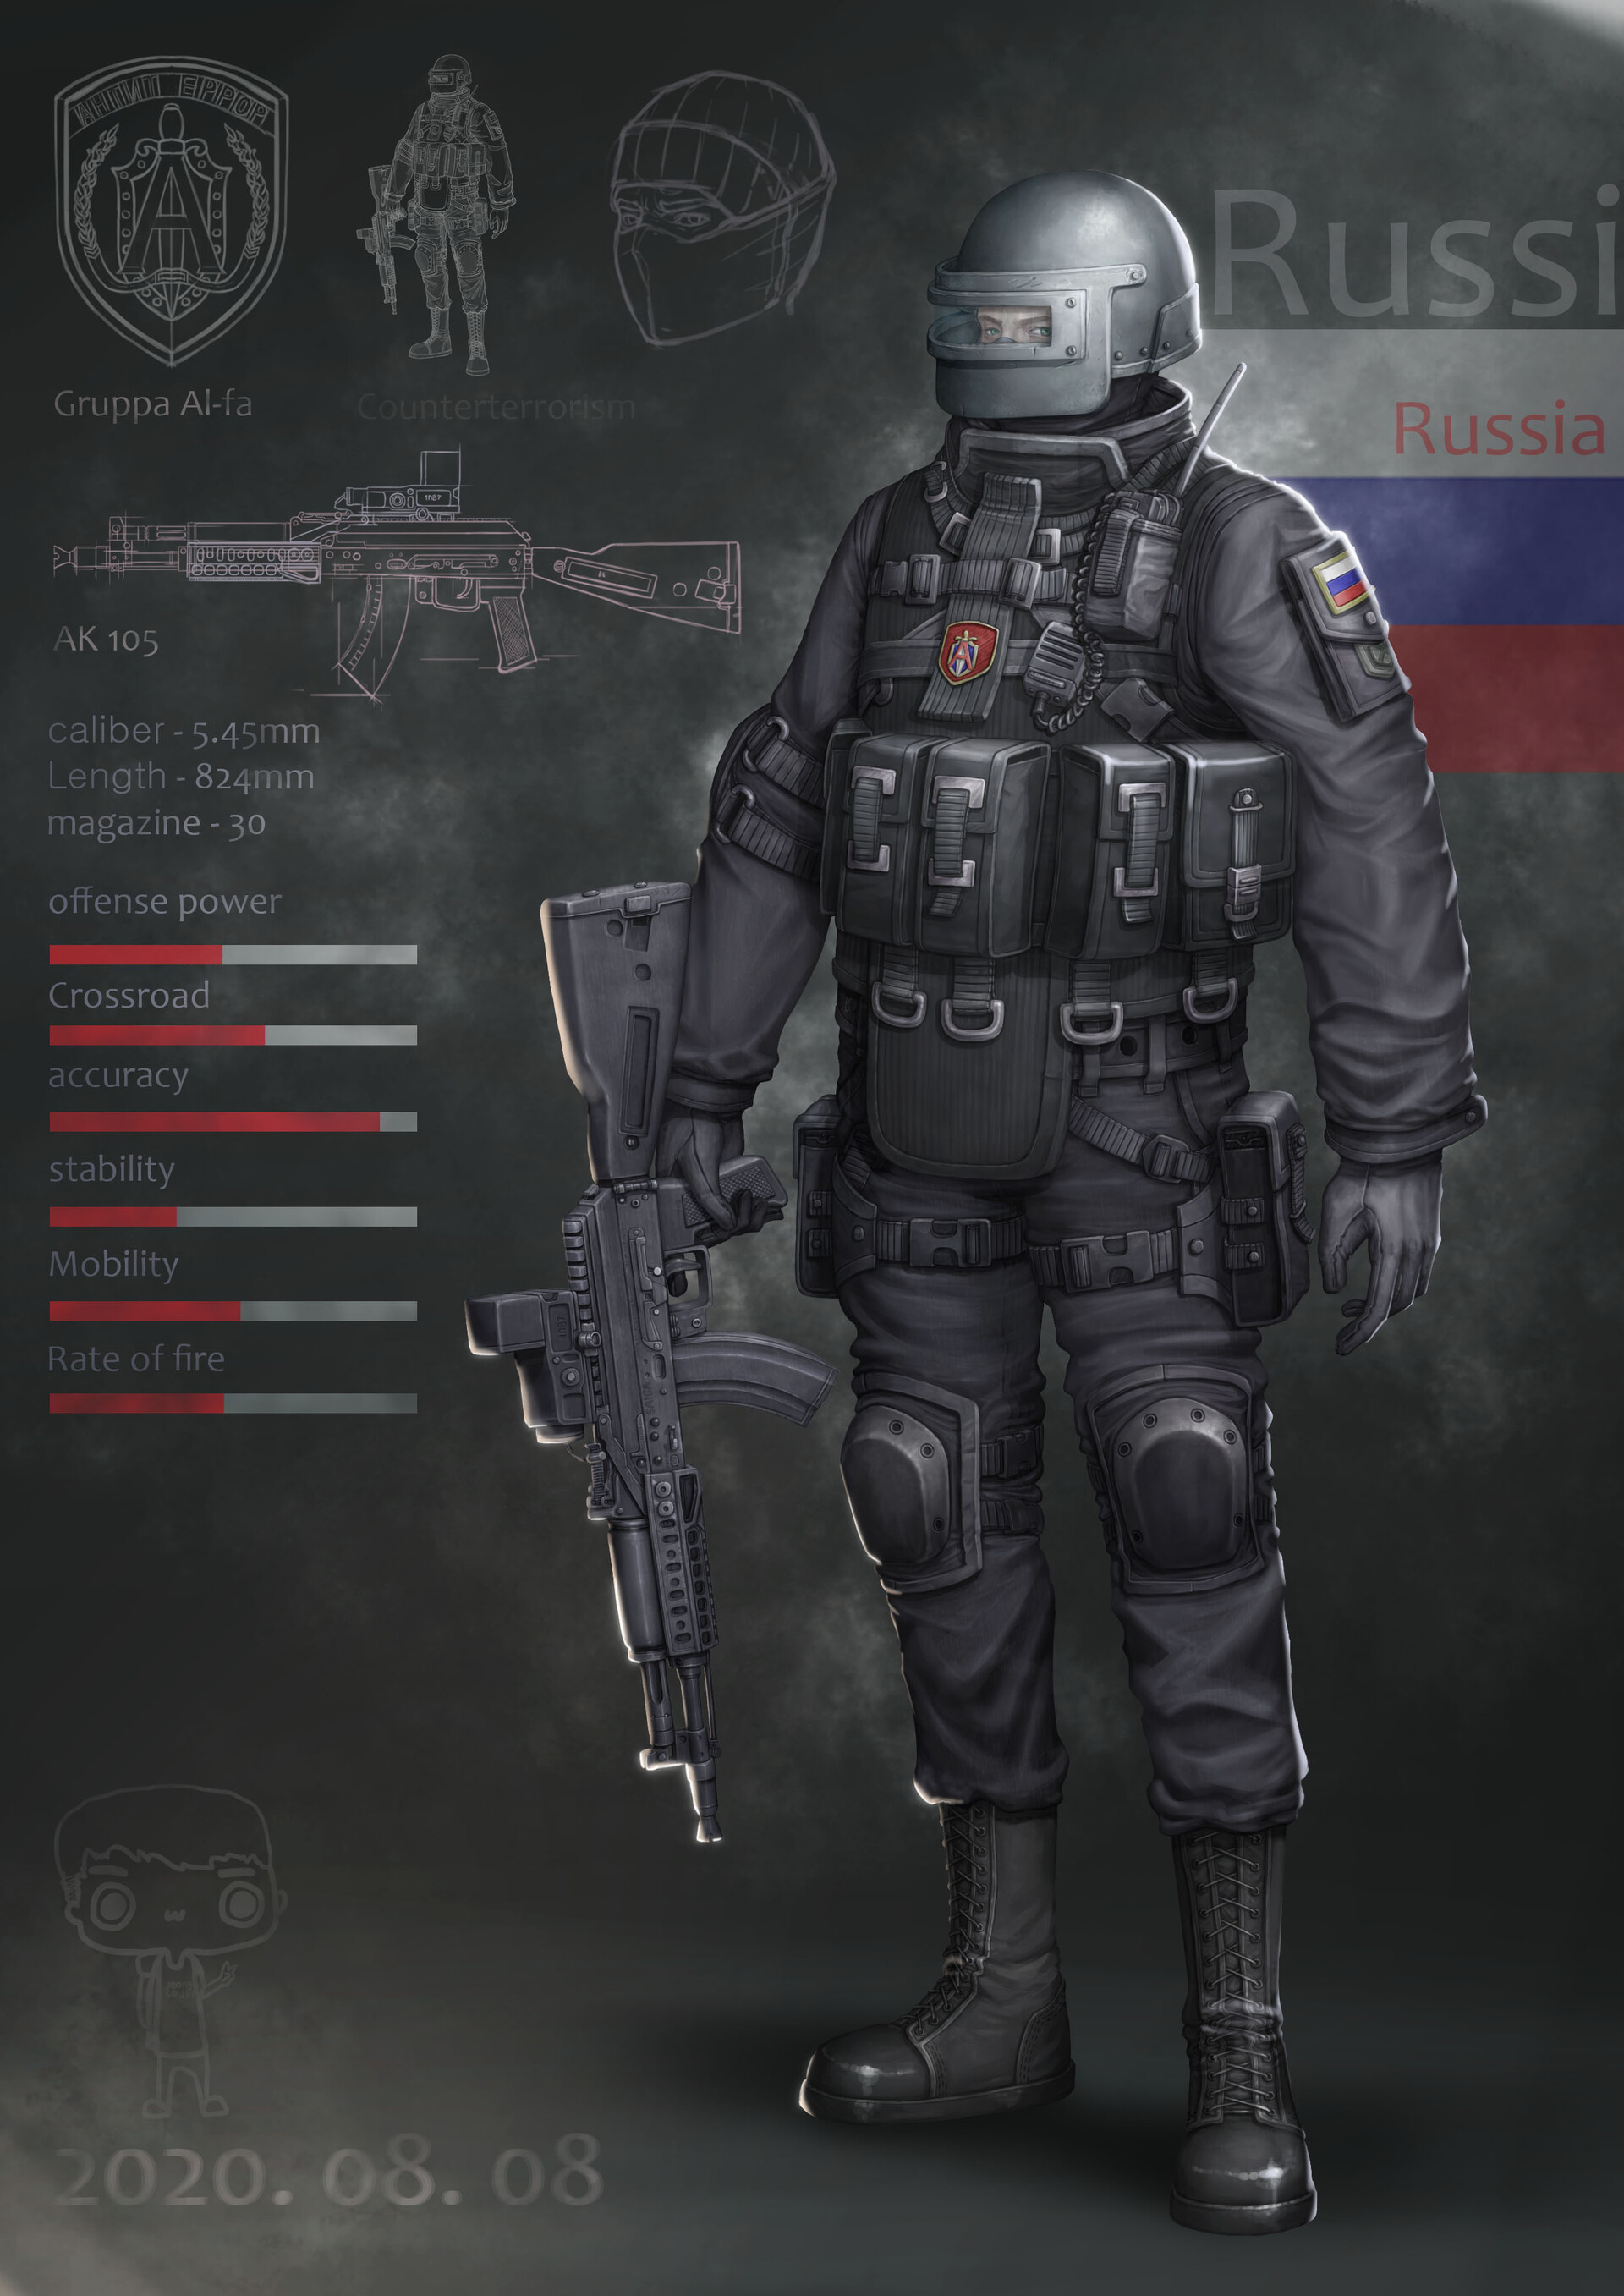 ArtStation - 러시아 대테러 알파부대 군인